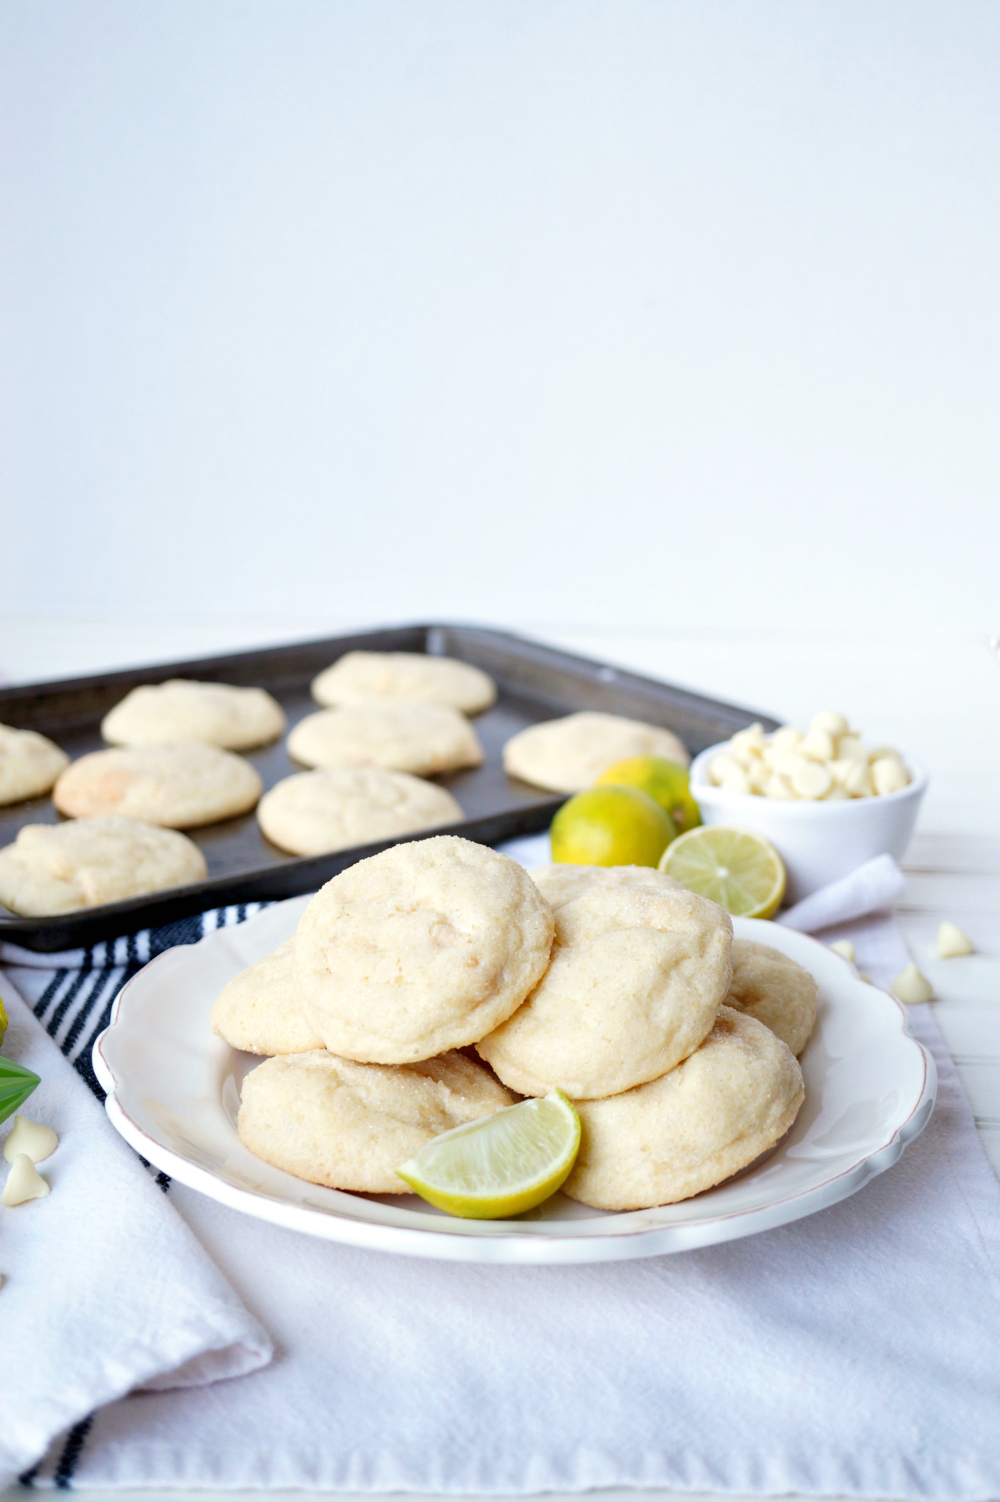 white chocolate lime sugar cookies | The Baking Fairy